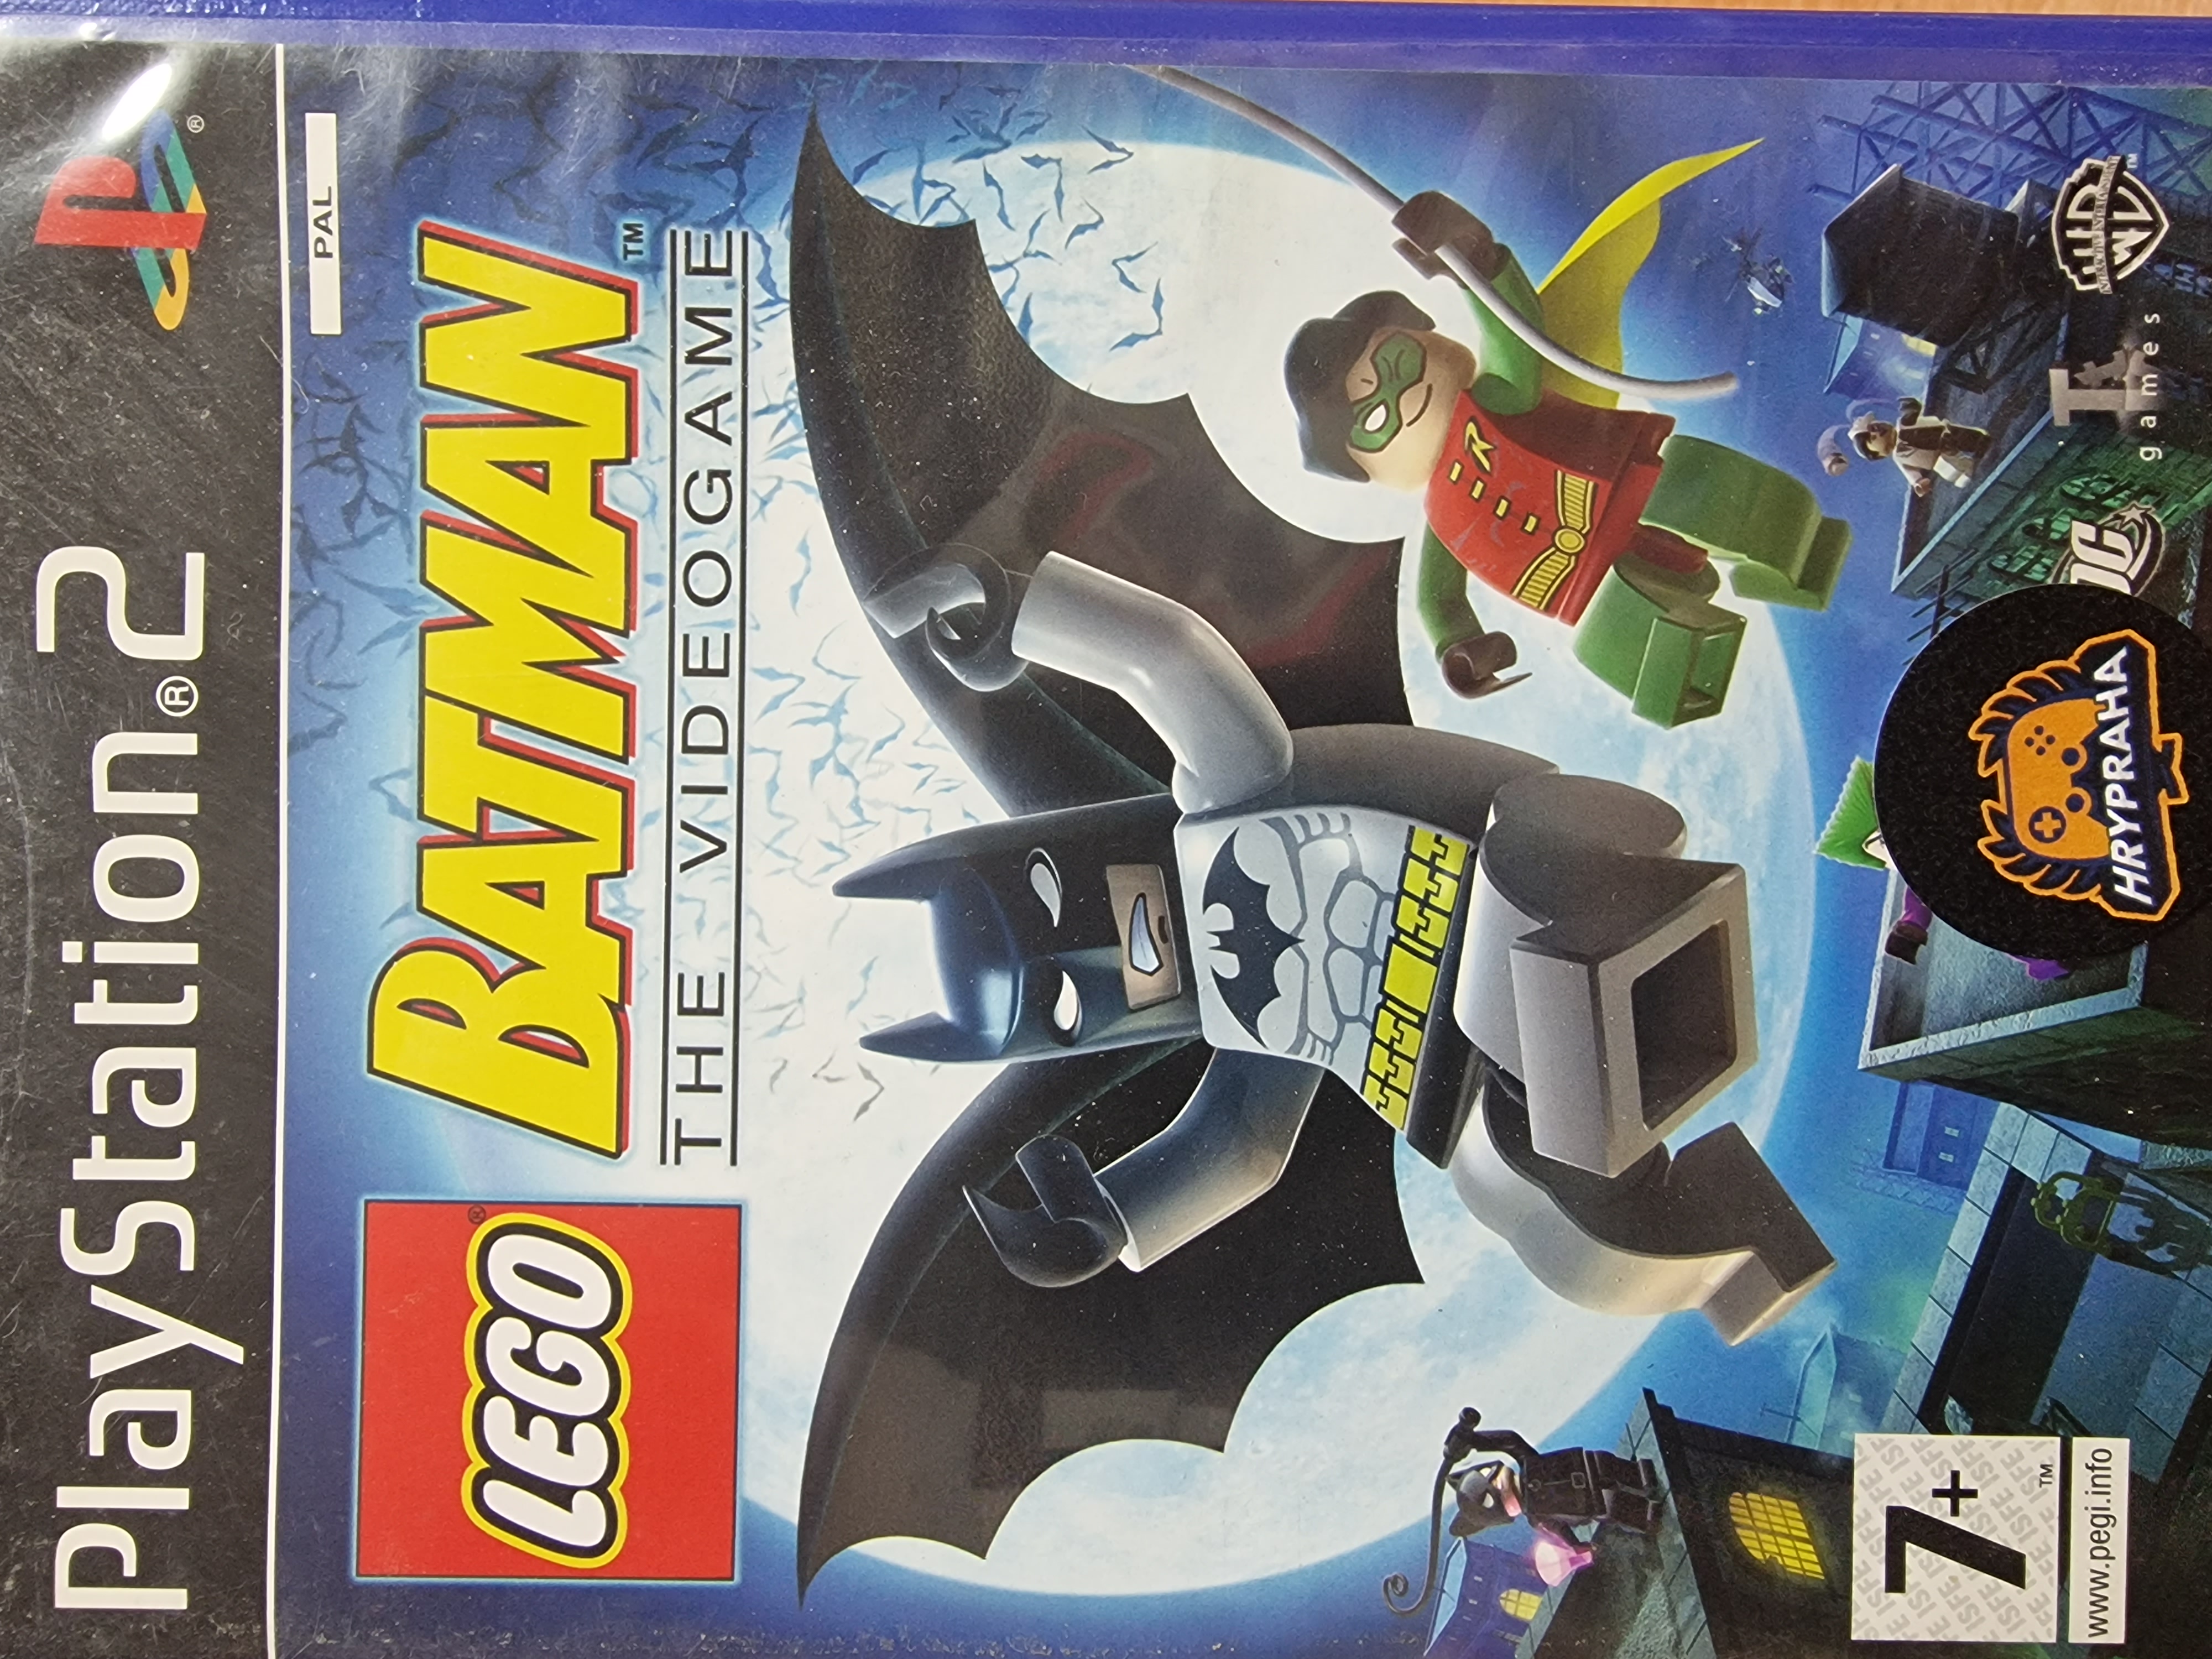 Lego Batman The video game  Ps2 